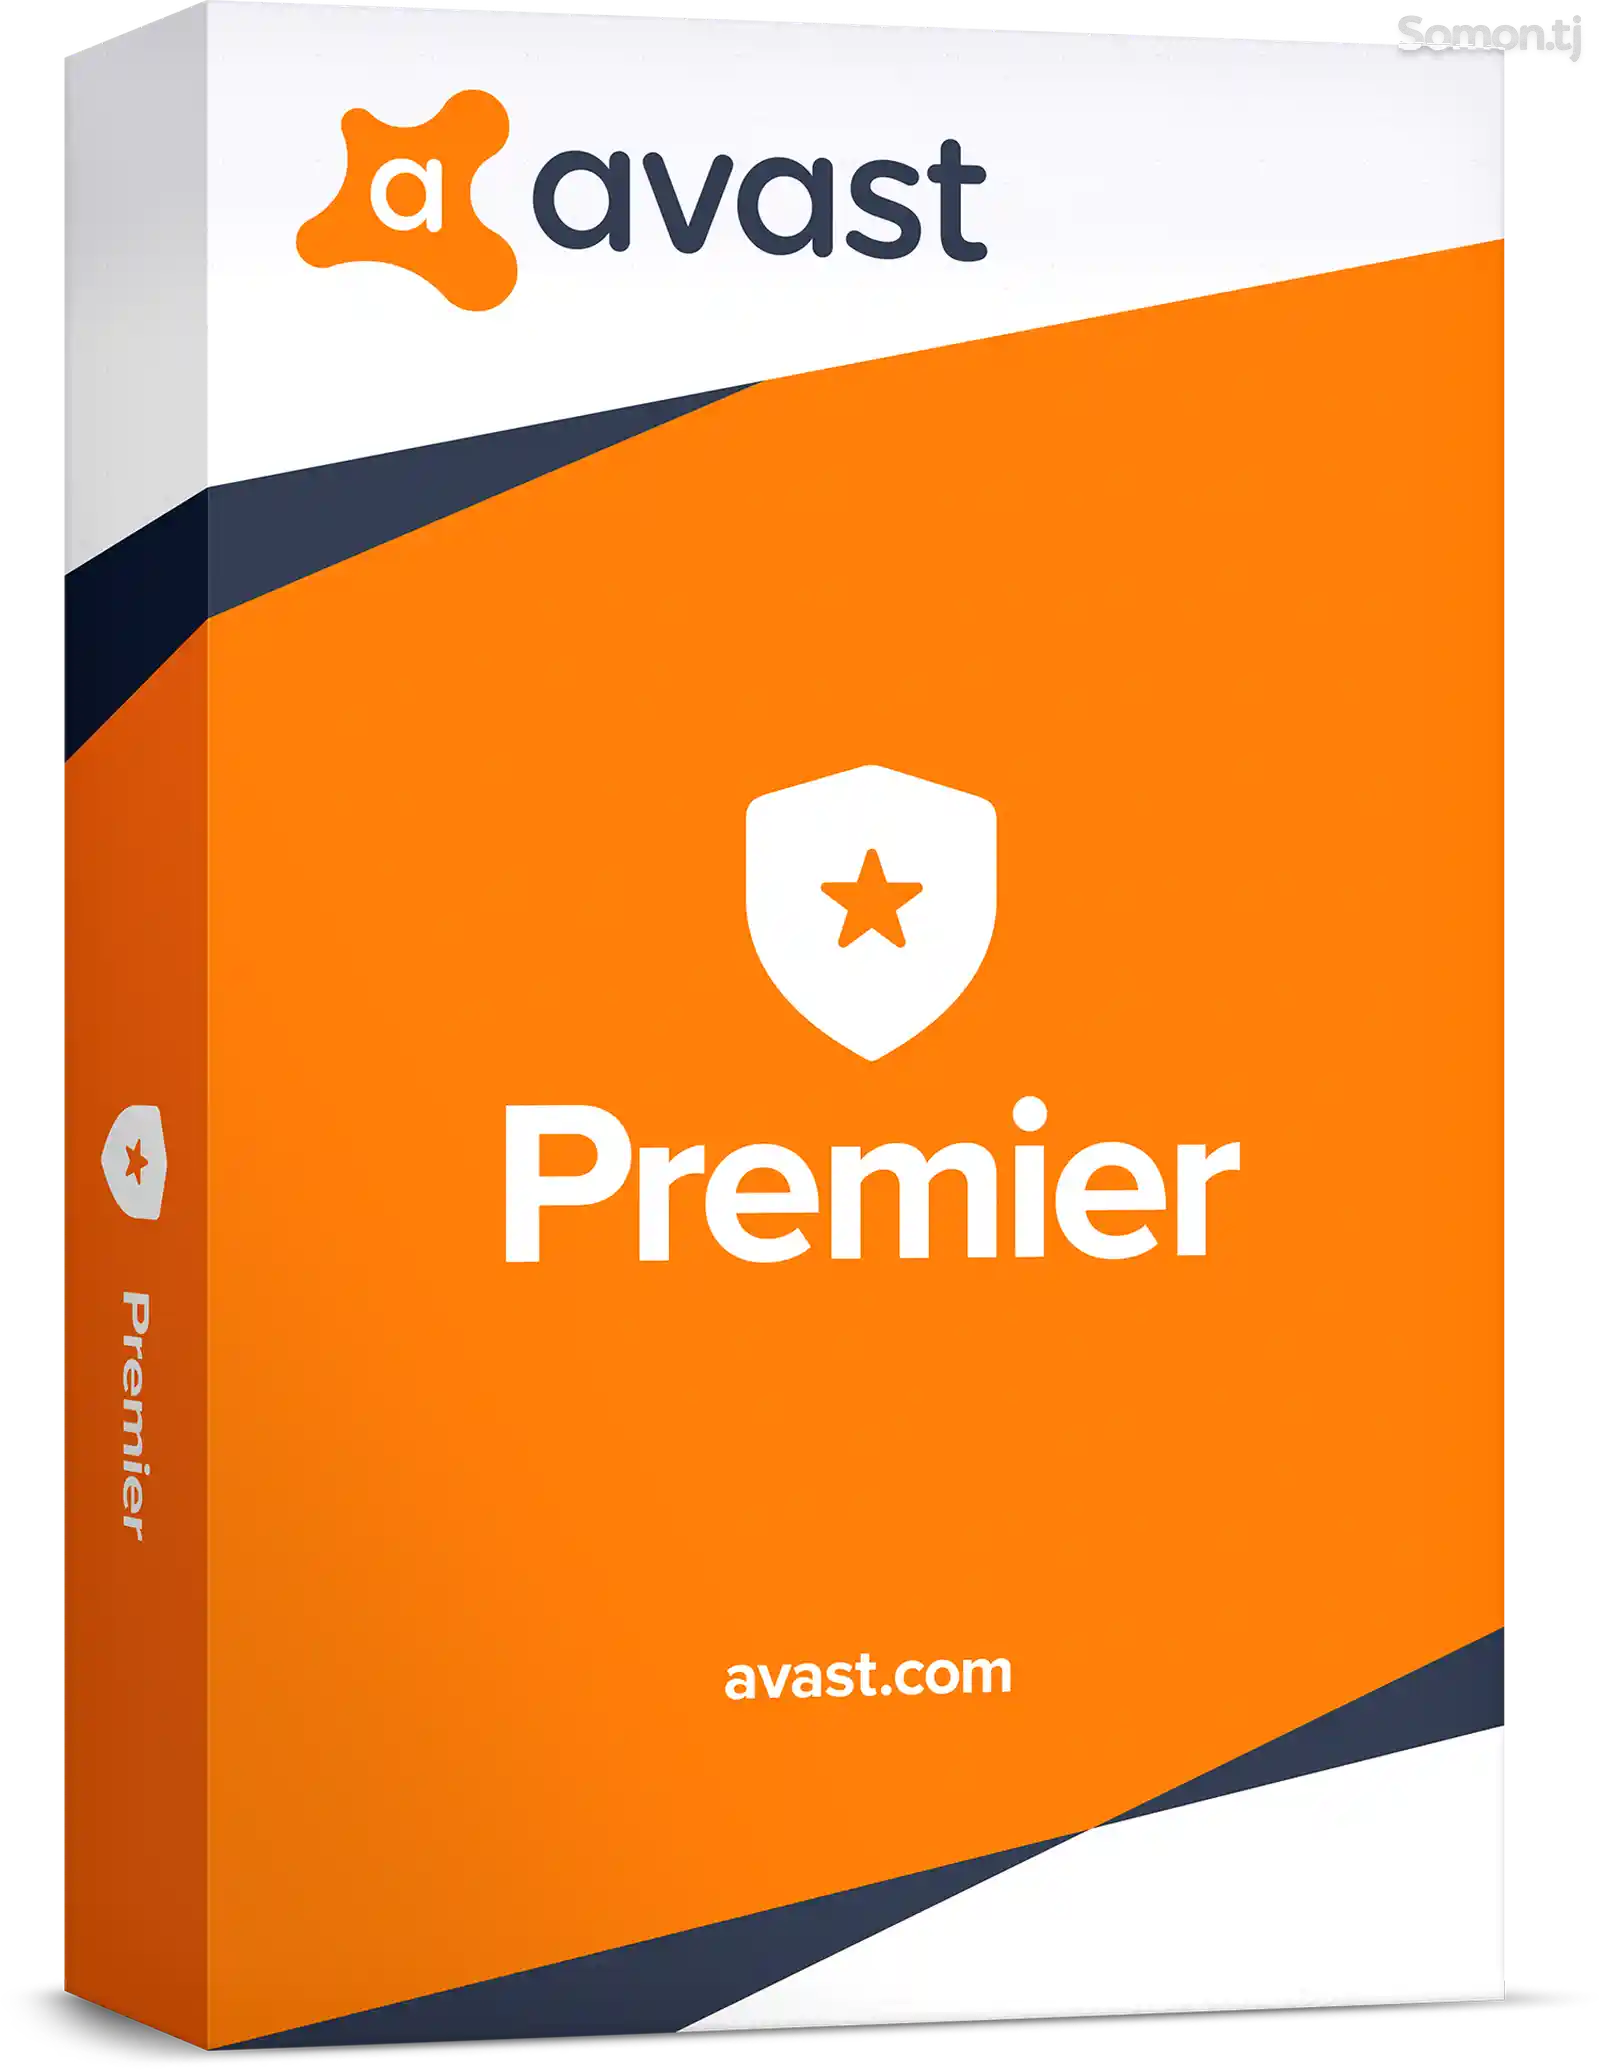 Avast Premium Security - иҷозатнома барои 1 роёна, 1 сол